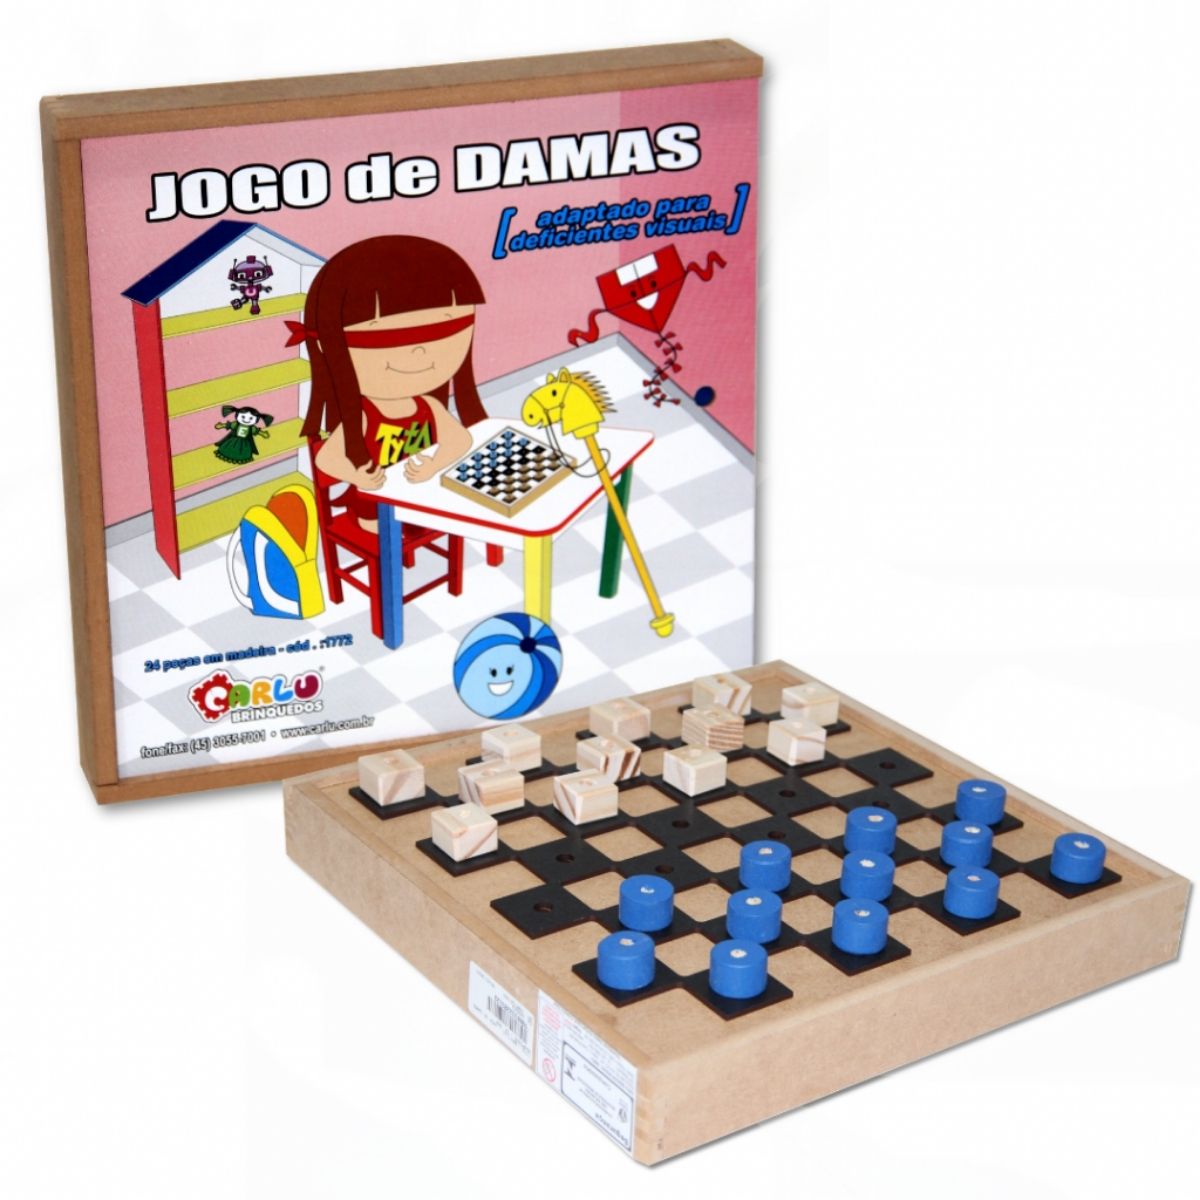 Brinquedo Educativo Braille Jogo de Damas Adaptado Material Pedagógico Inclusivo